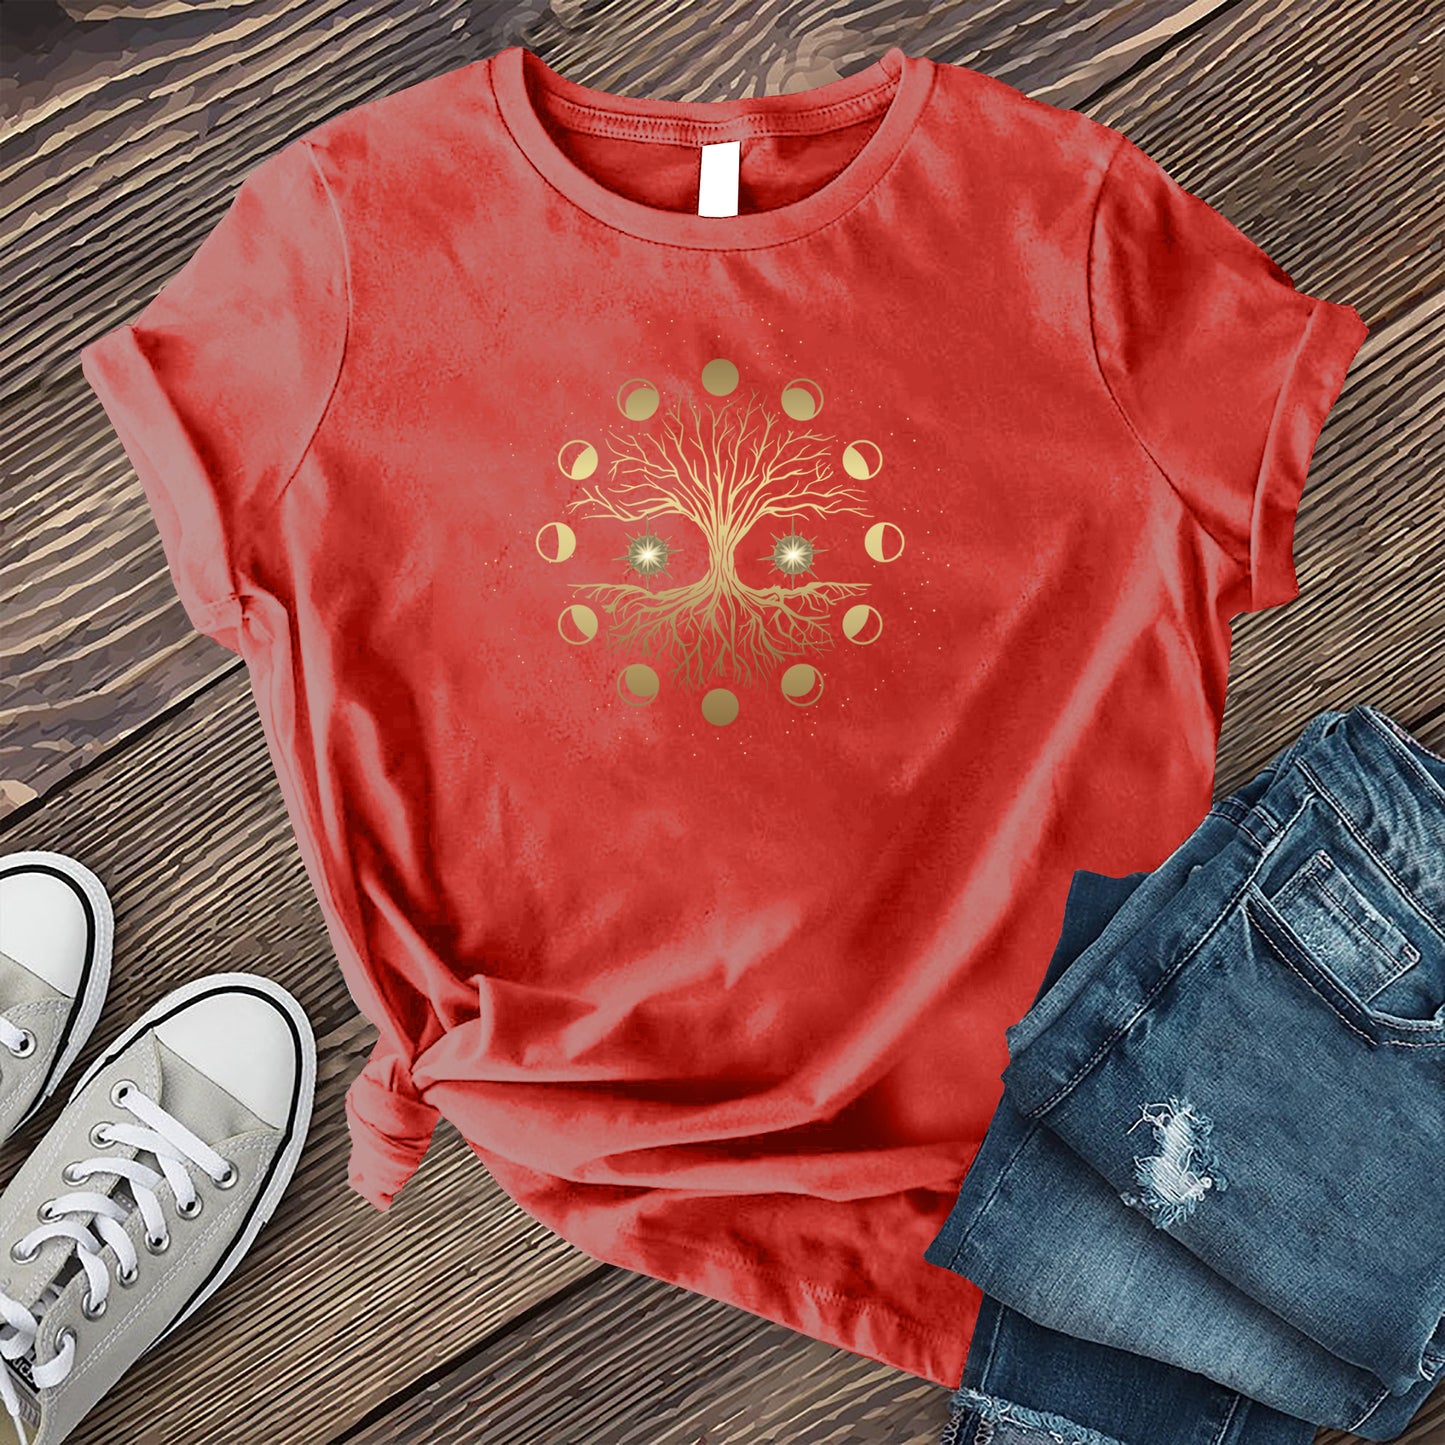 Lunar Phase Tree T-shirt